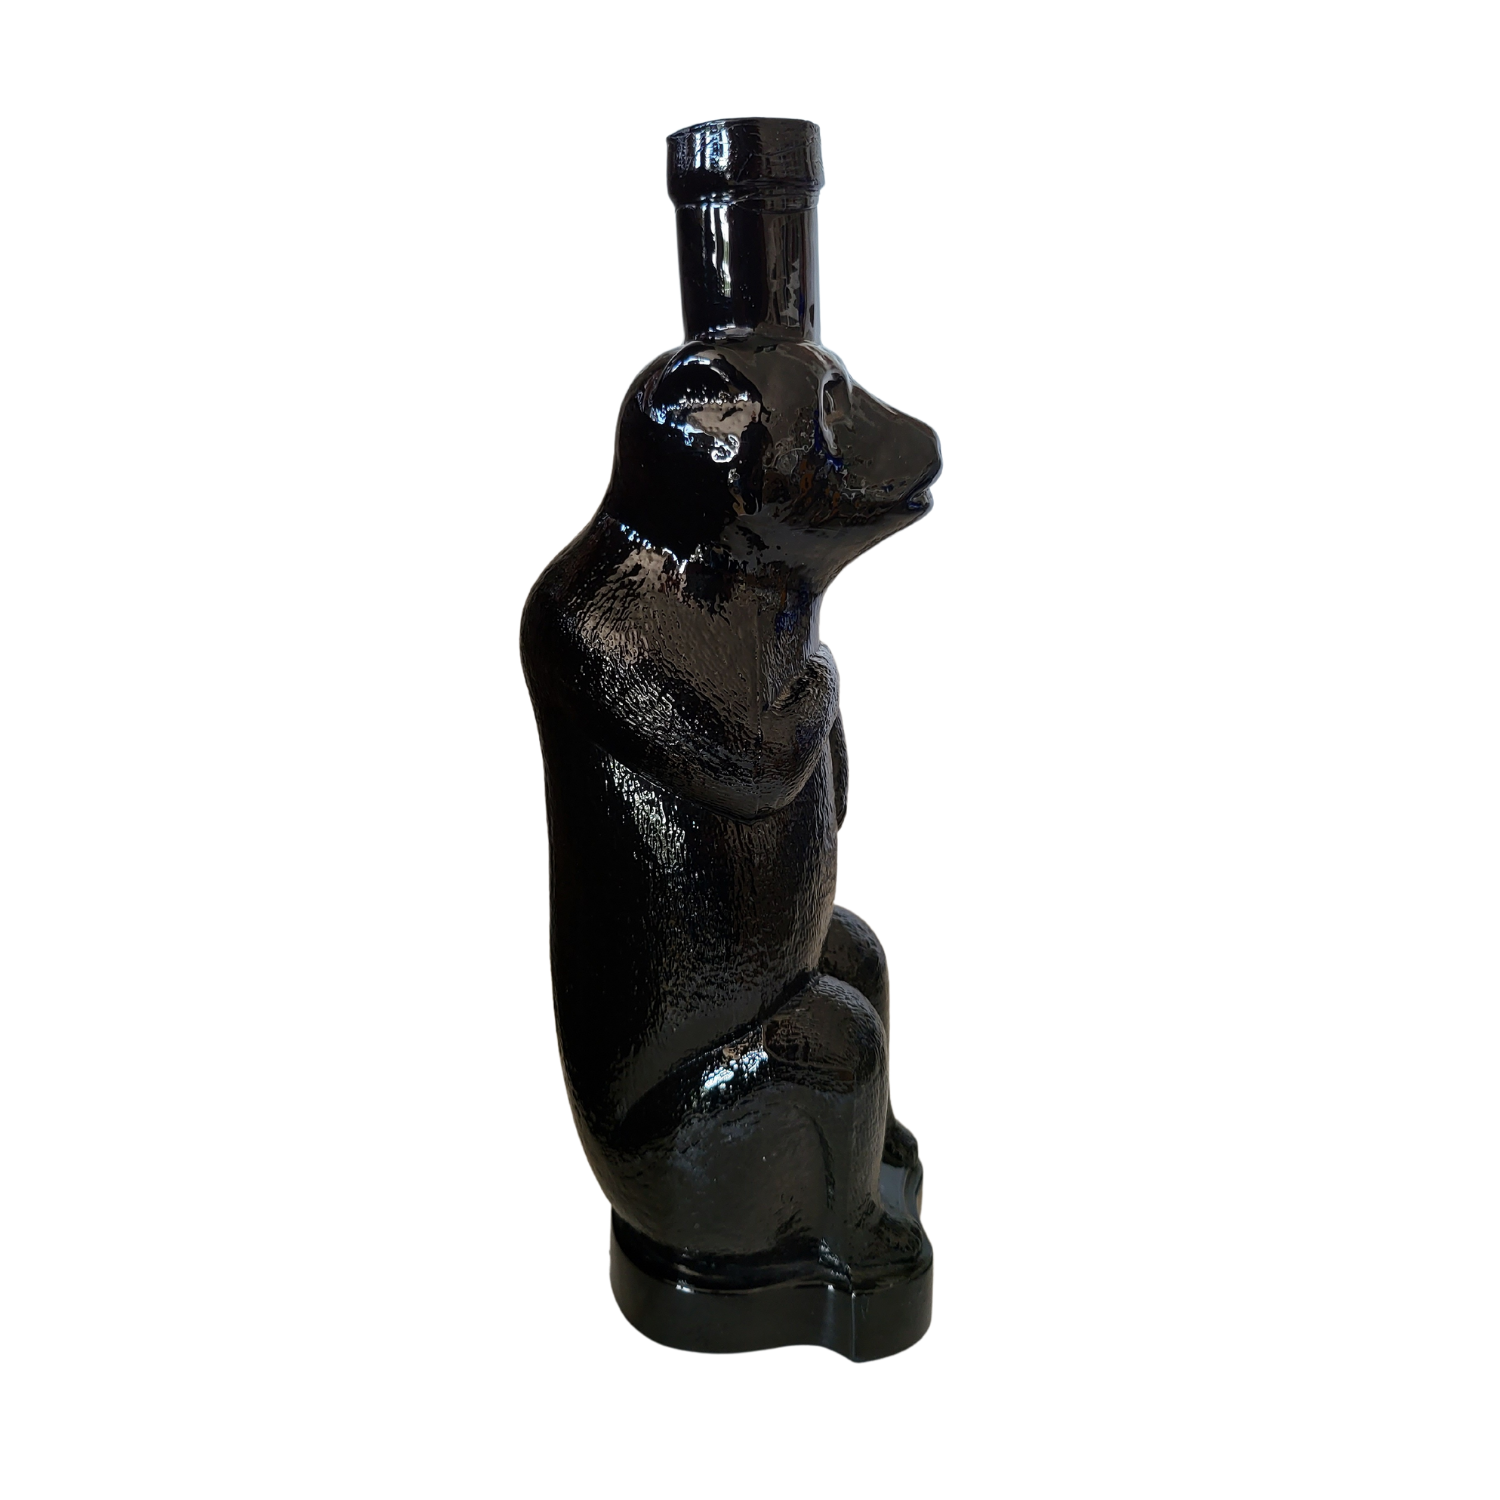 Antique Black Amethyst Kummel Bottle - 1890's